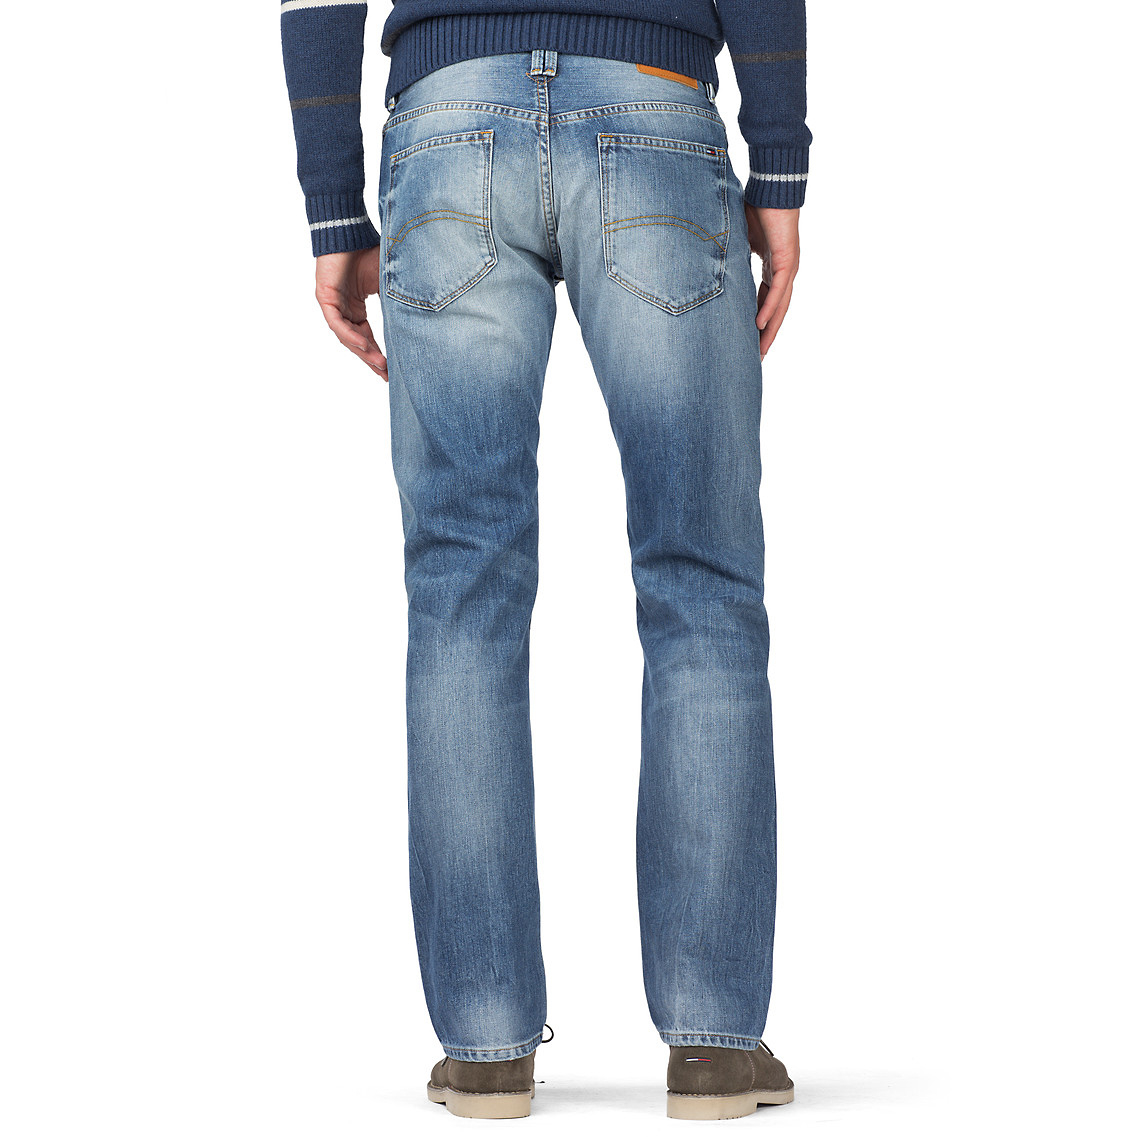 Tommy Hilfiger Rogar Straight Leg Jeans in Blue for Men - Lyst